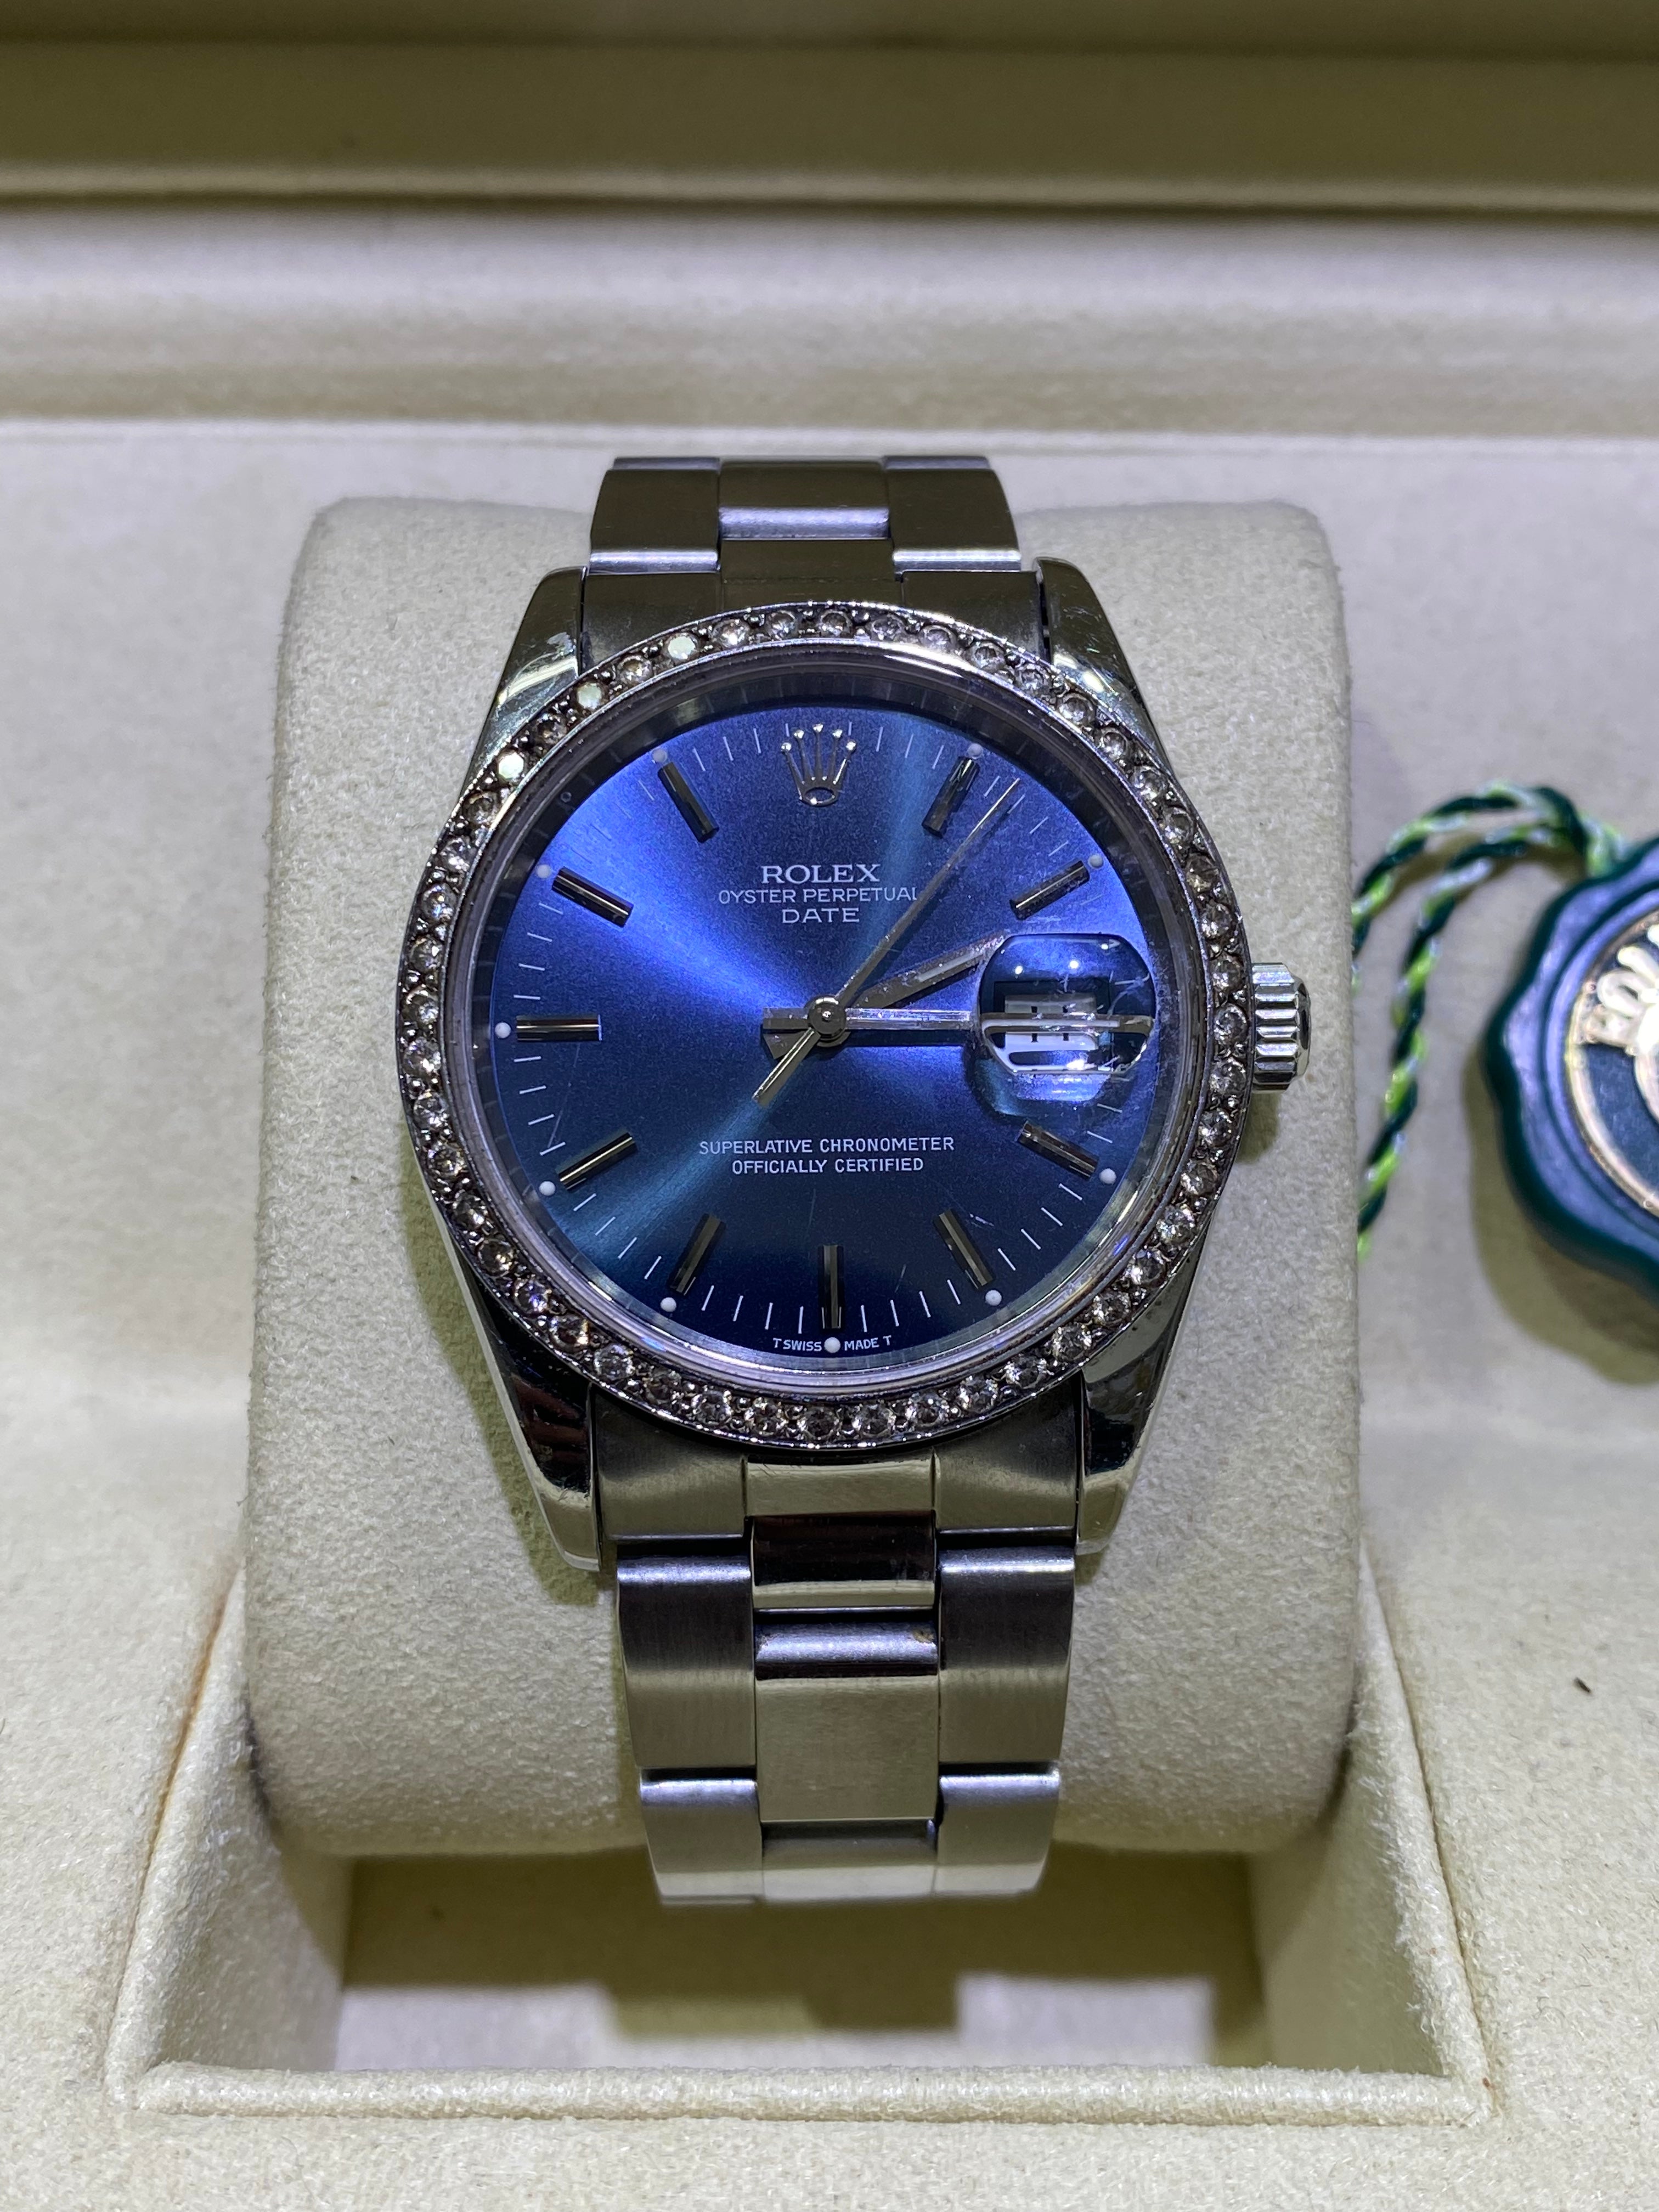 34mm Rolex diamond bezel unisex serviced and 1 year warranty